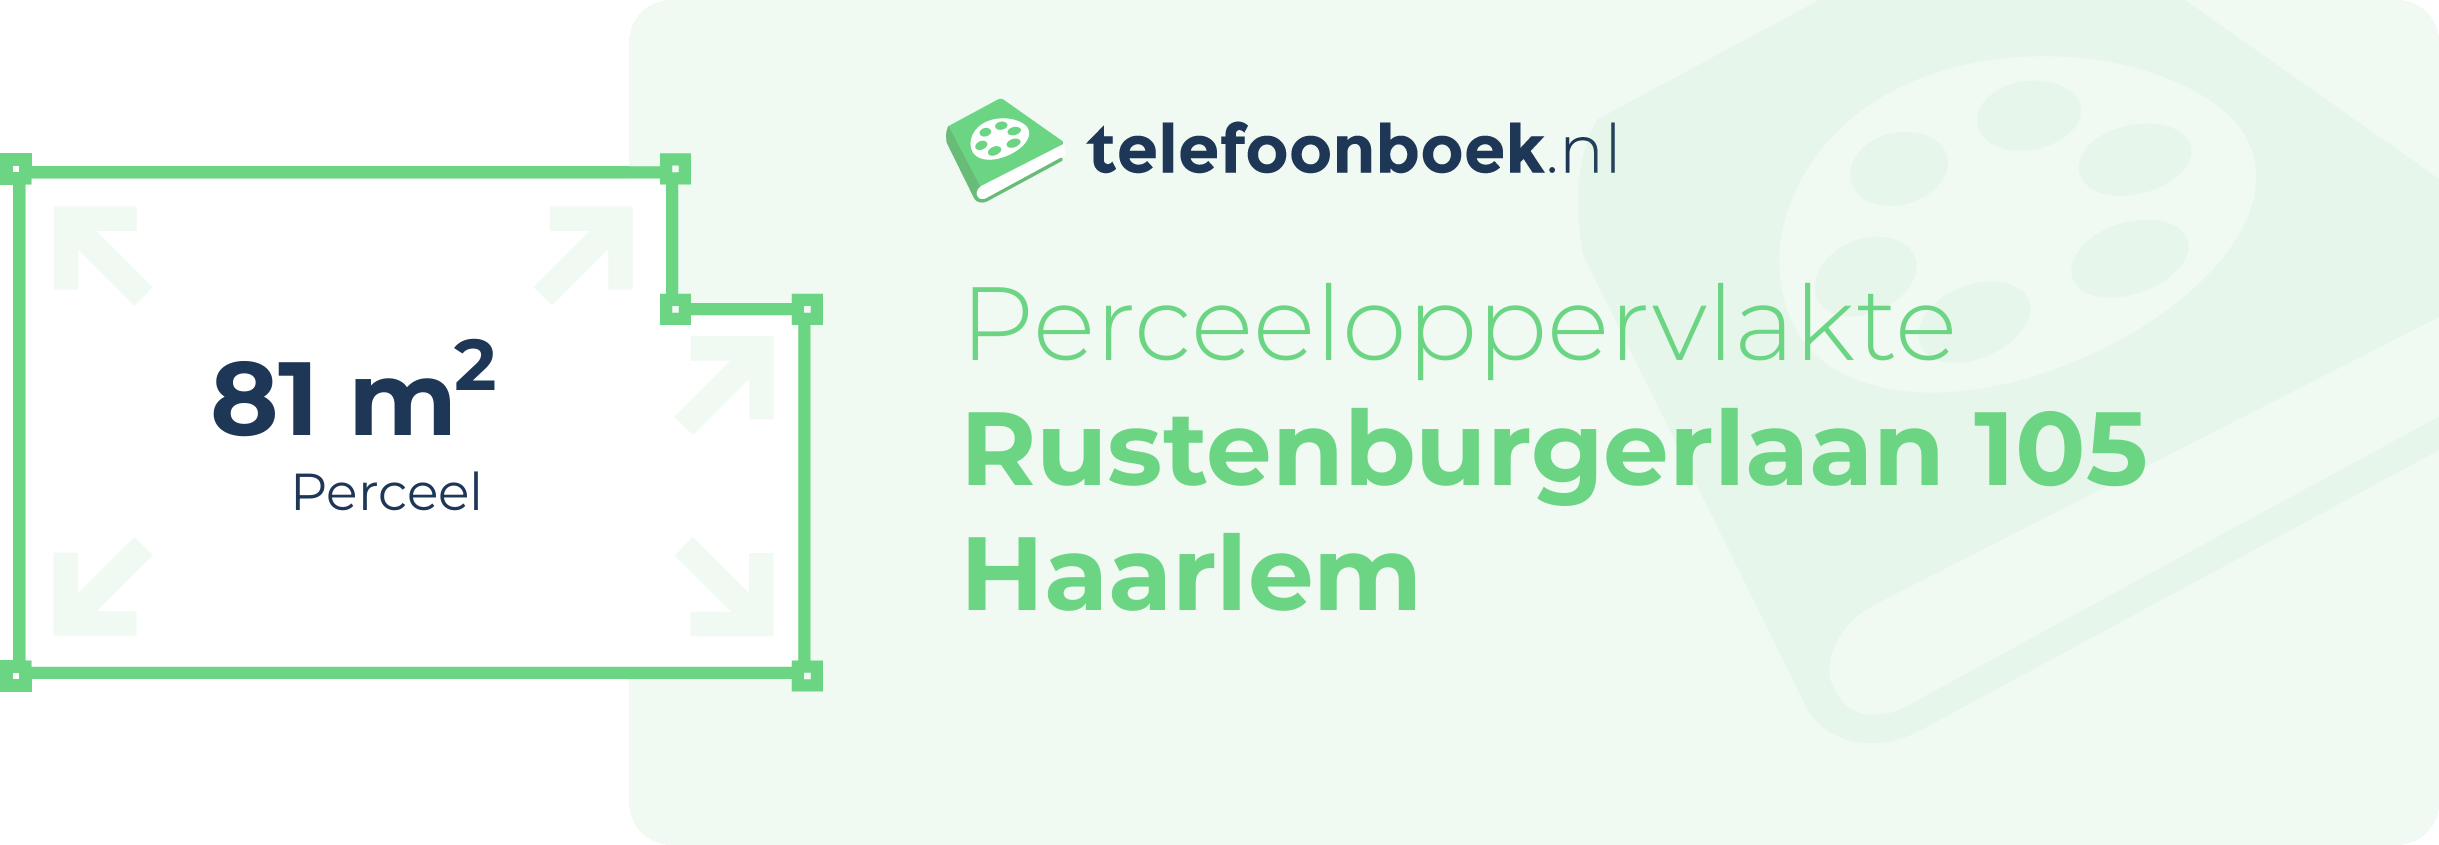 Perceeloppervlakte Rustenburgerlaan 105 Haarlem